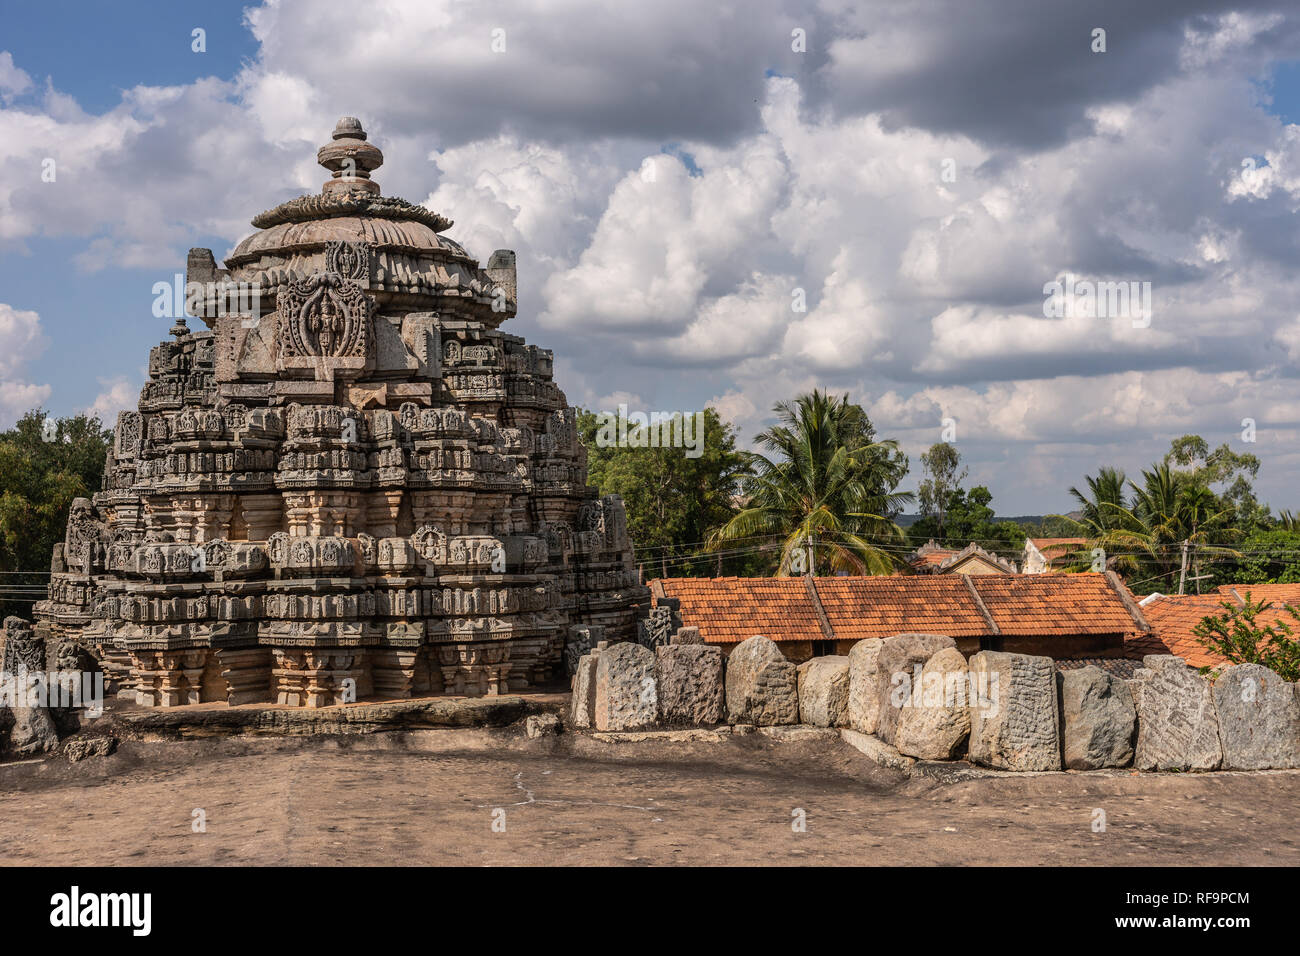 Belavadi, Karnataka, India - November 2, 2013: Veera Narayana Temple. One of three brown-stone Vimana towers of the complex under cloudscape. Shot fro Stock Photo